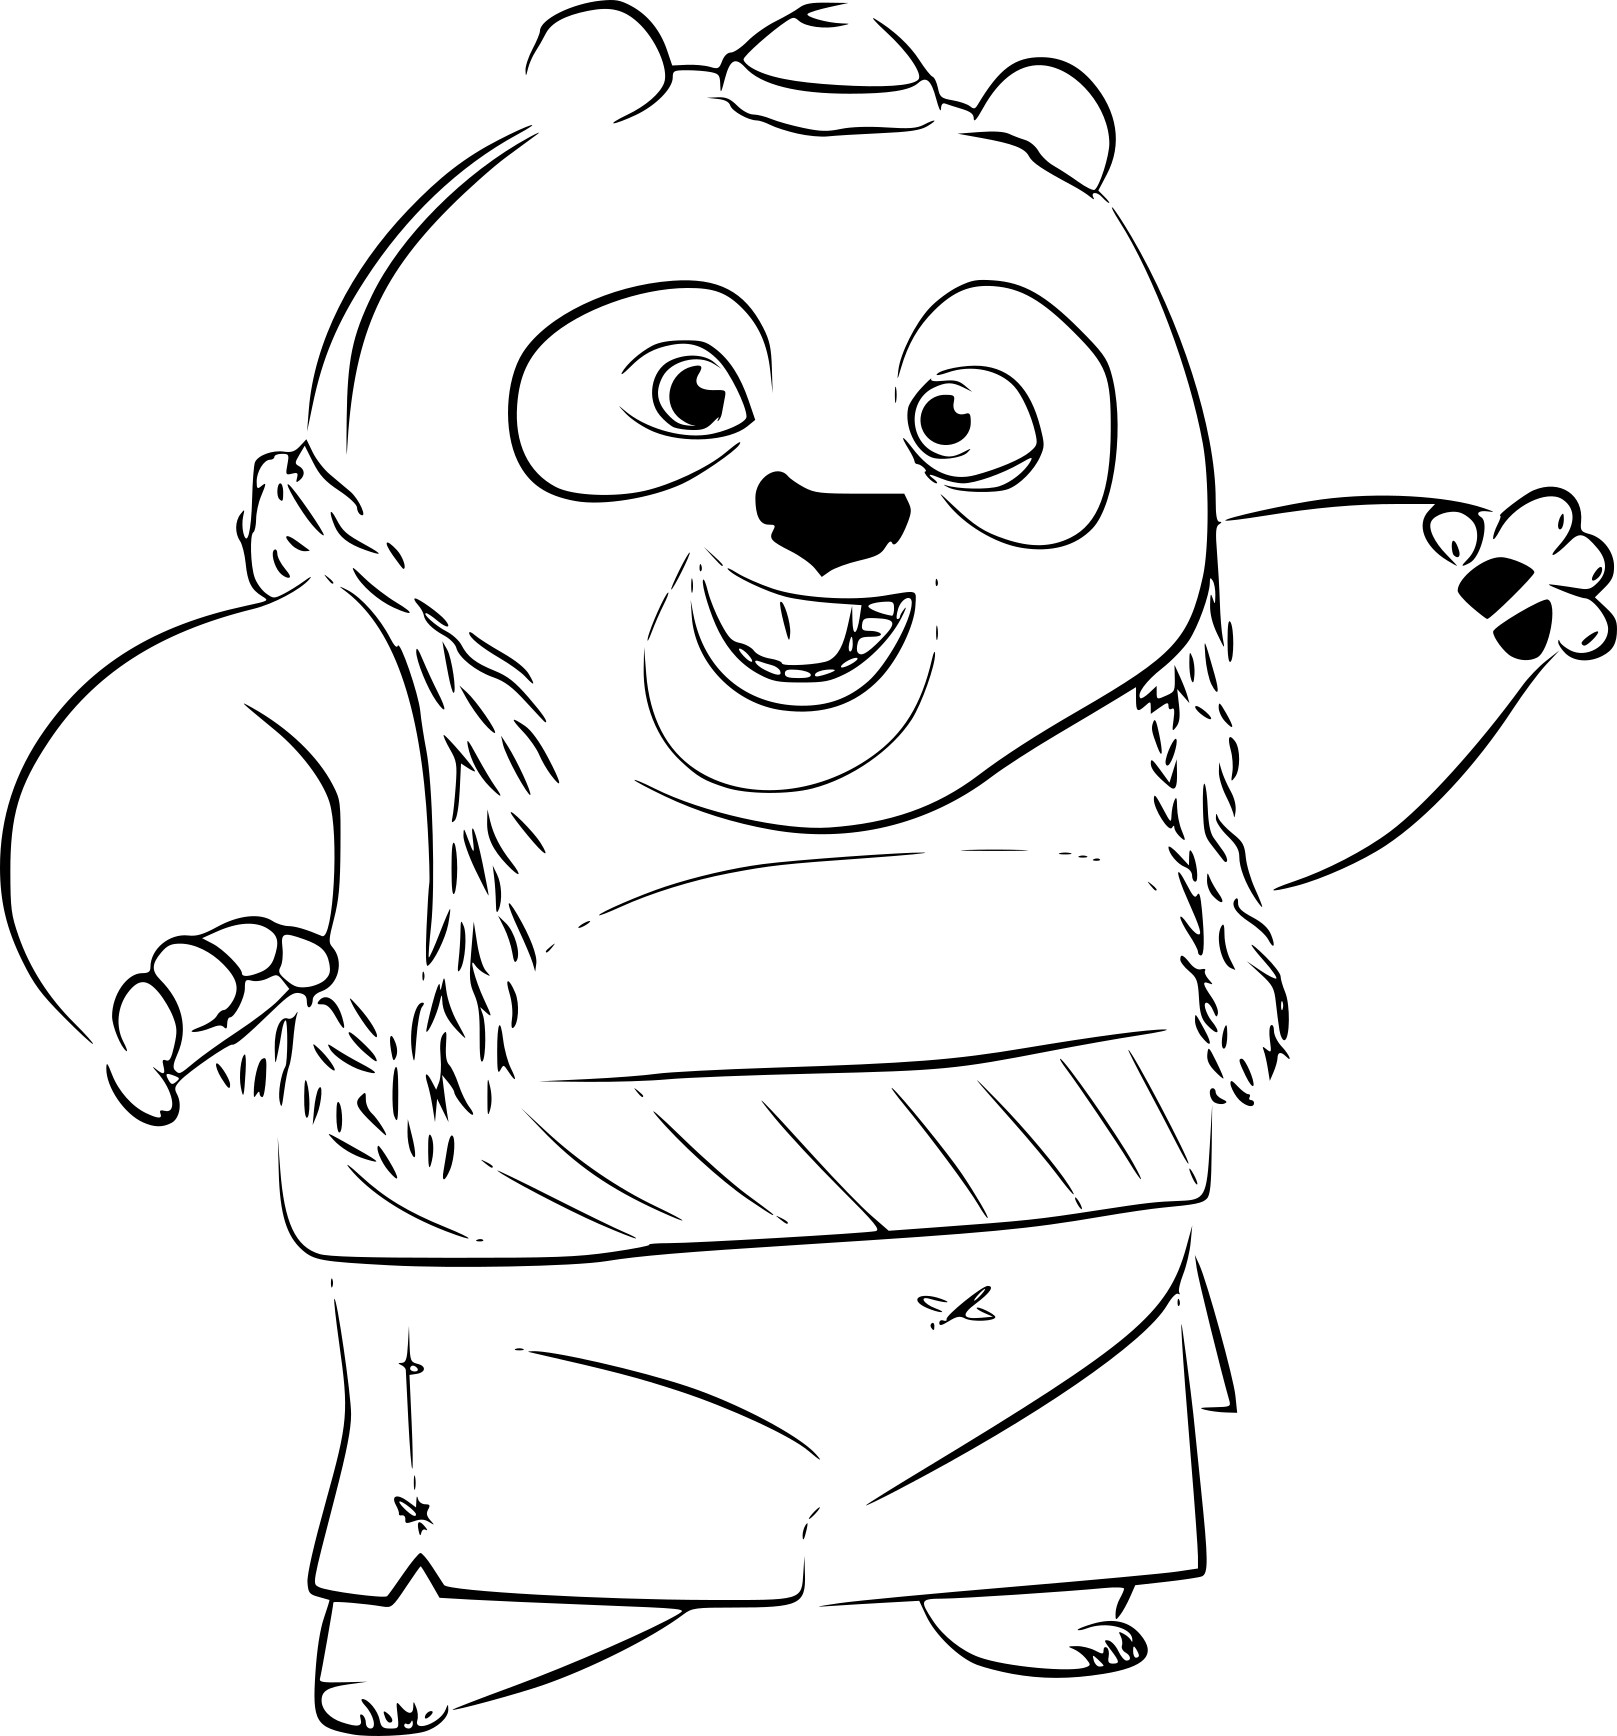 Раскраска кунг фу панда. Кунг фу Панда раскраска для детей. Раскраска кунфу Панда 3. Кунг фу Панда Бао. Панда раскраска для детей.